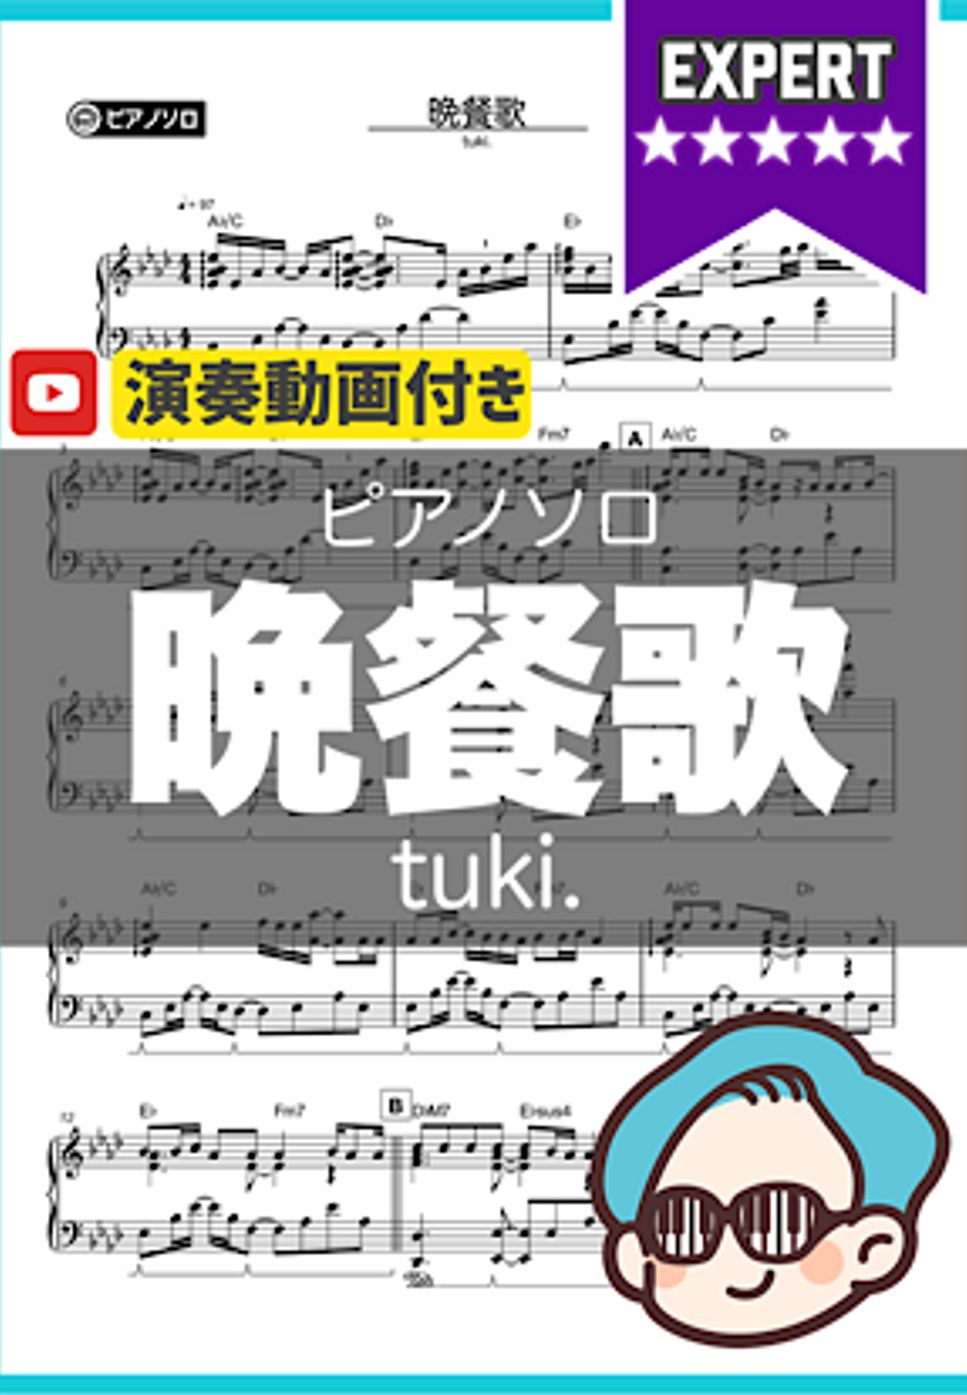 tuki. - 晩餐歌 by シータピアノ